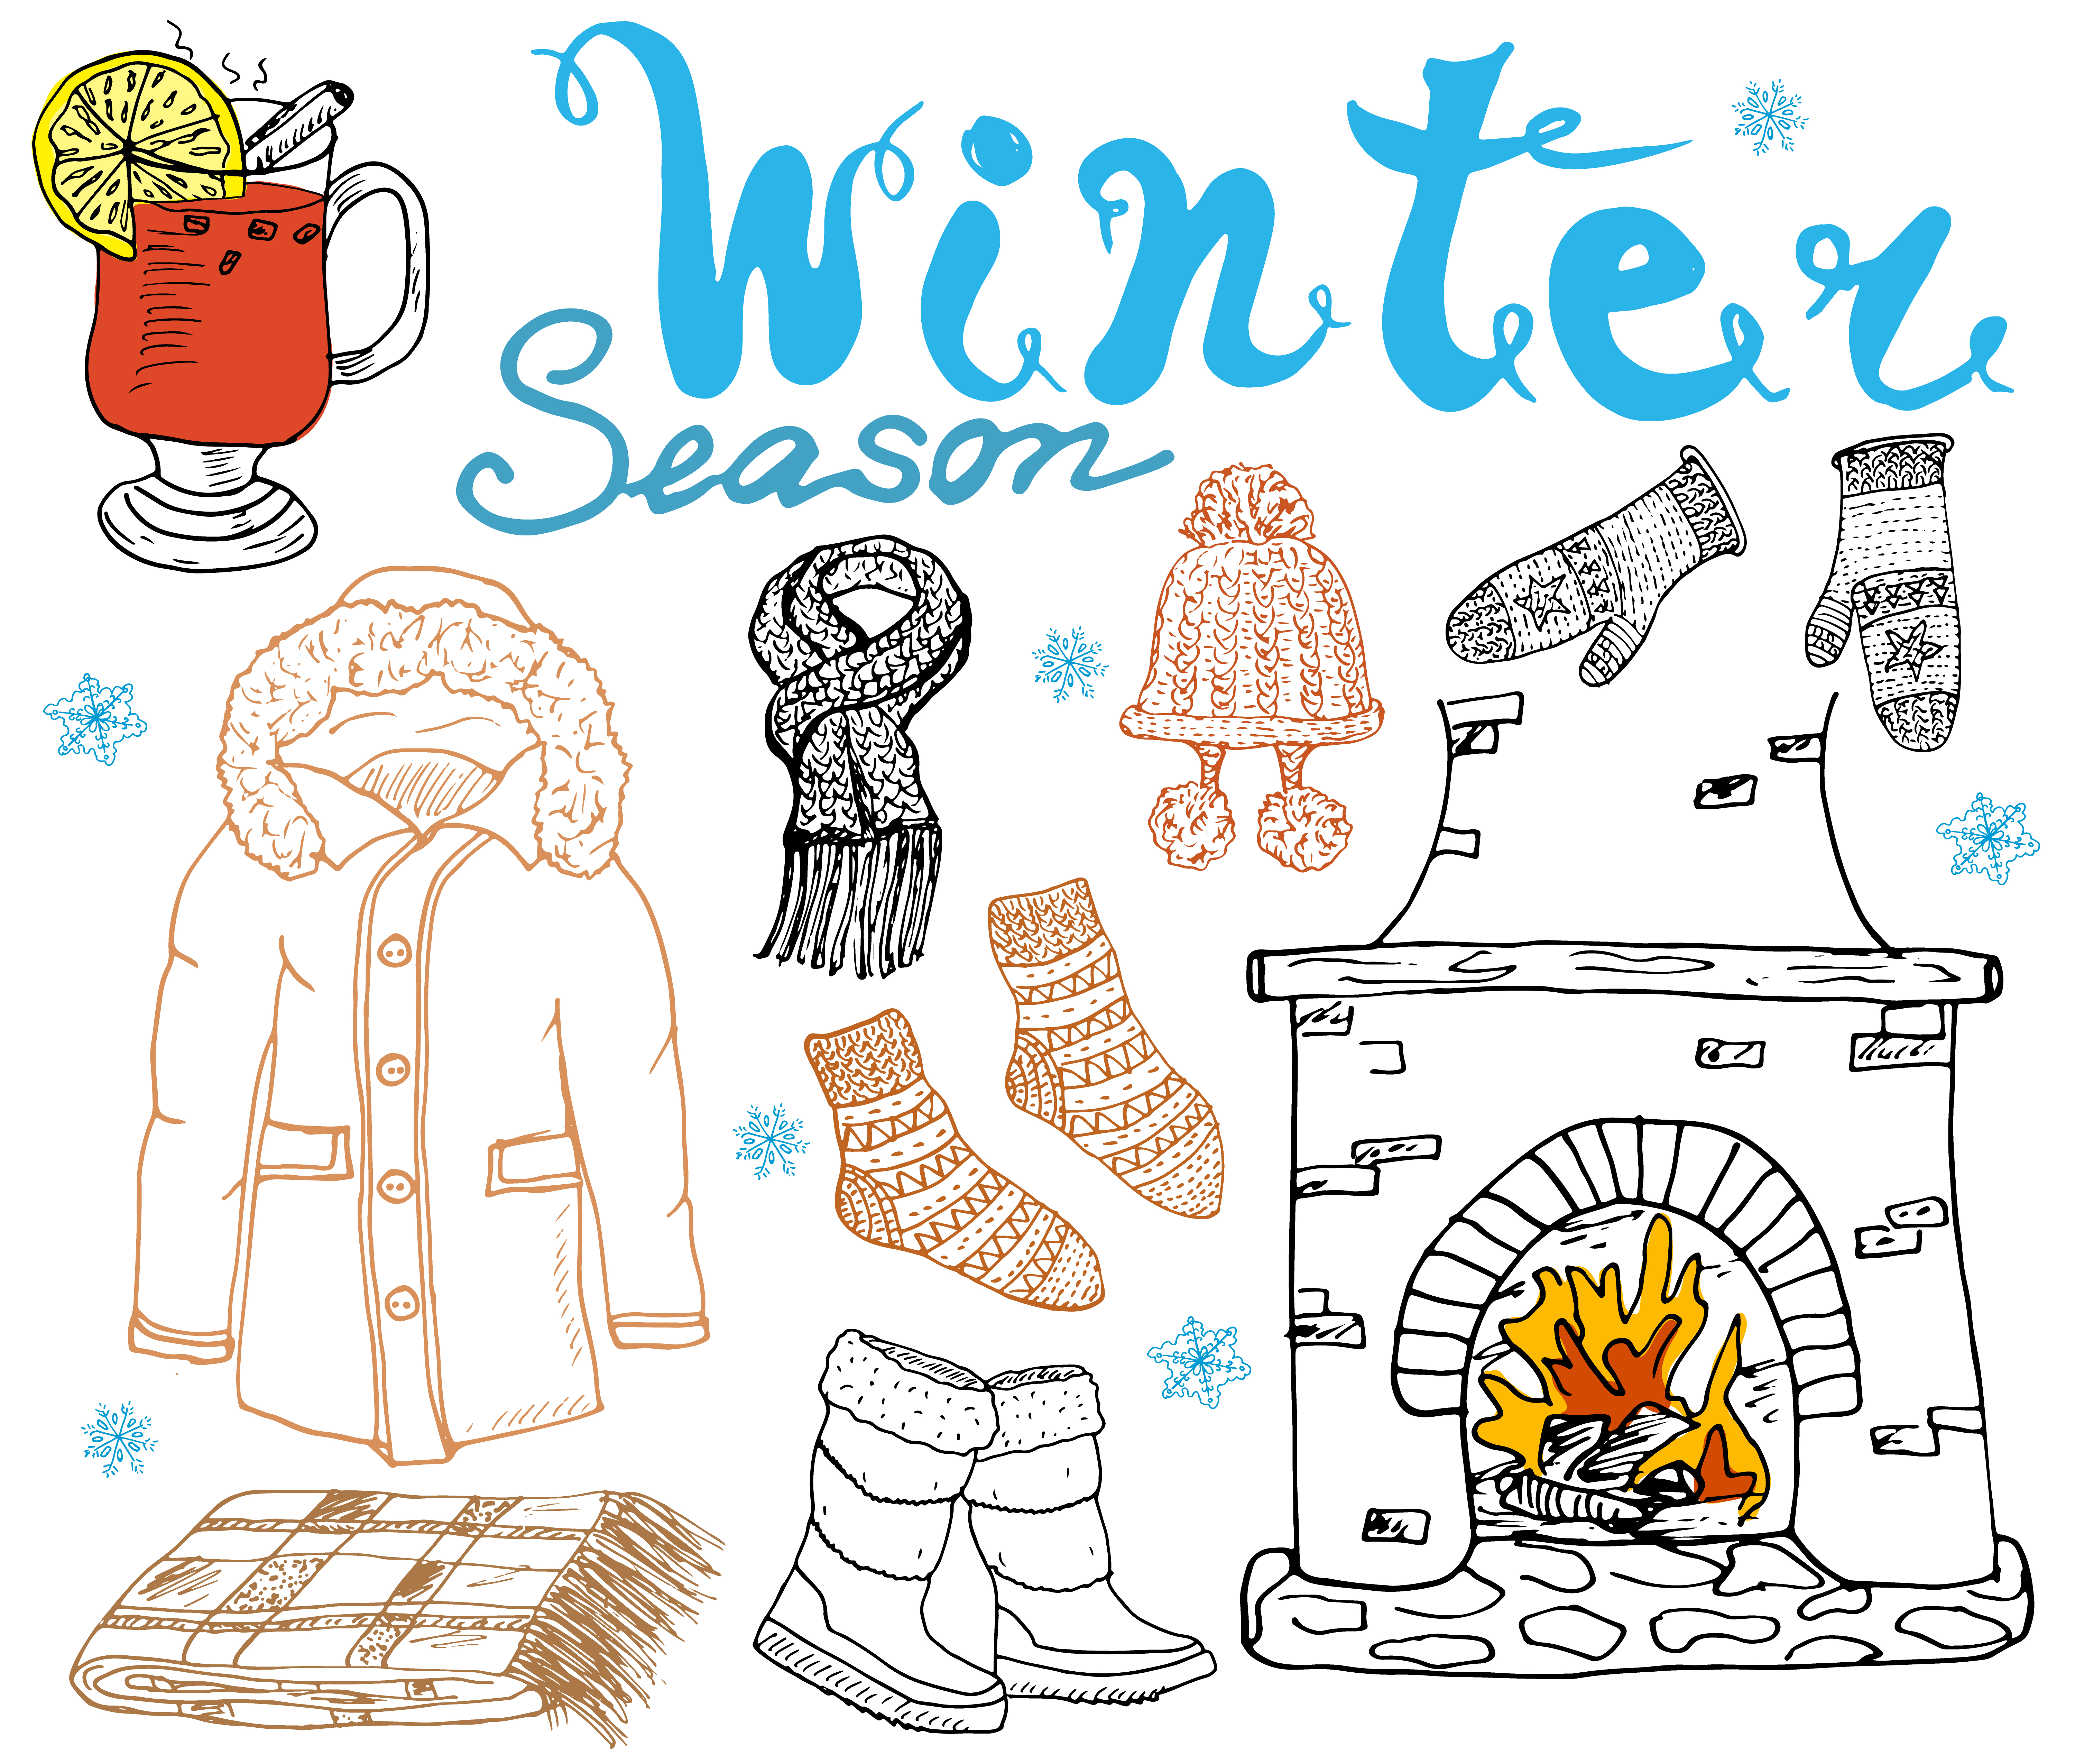 How to draw easy winter season scenery  Scenery Drawing  Snowfall scenery   Winter Season Drawing  YouTube